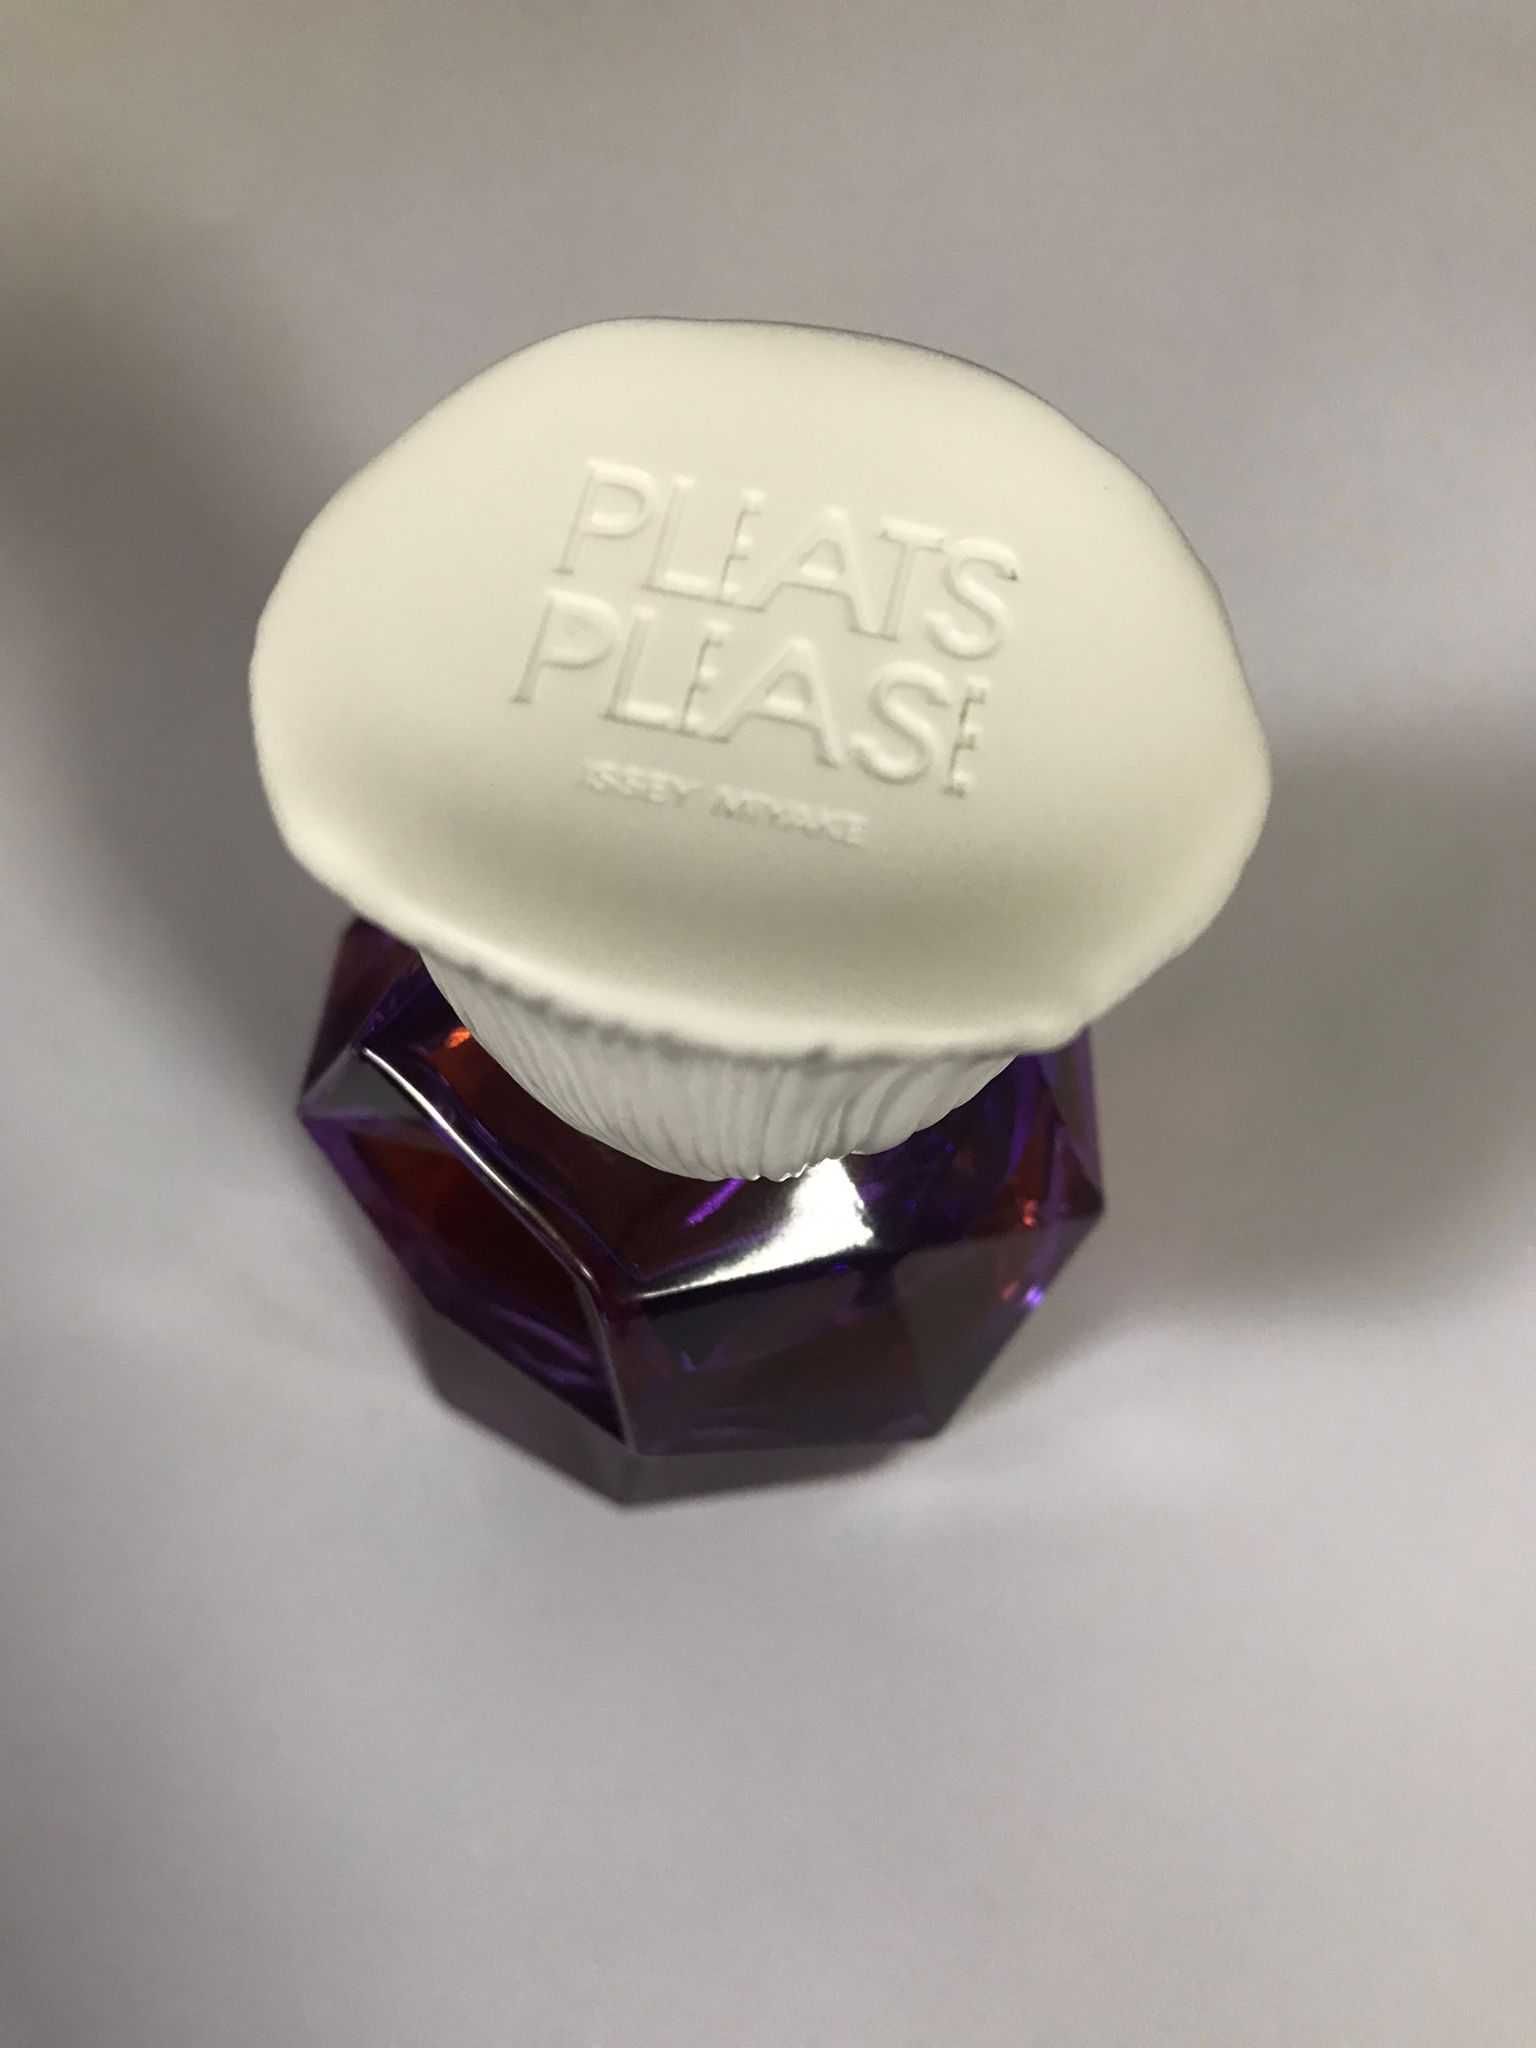 RAR Parfum Pleats Please Issey Miyake